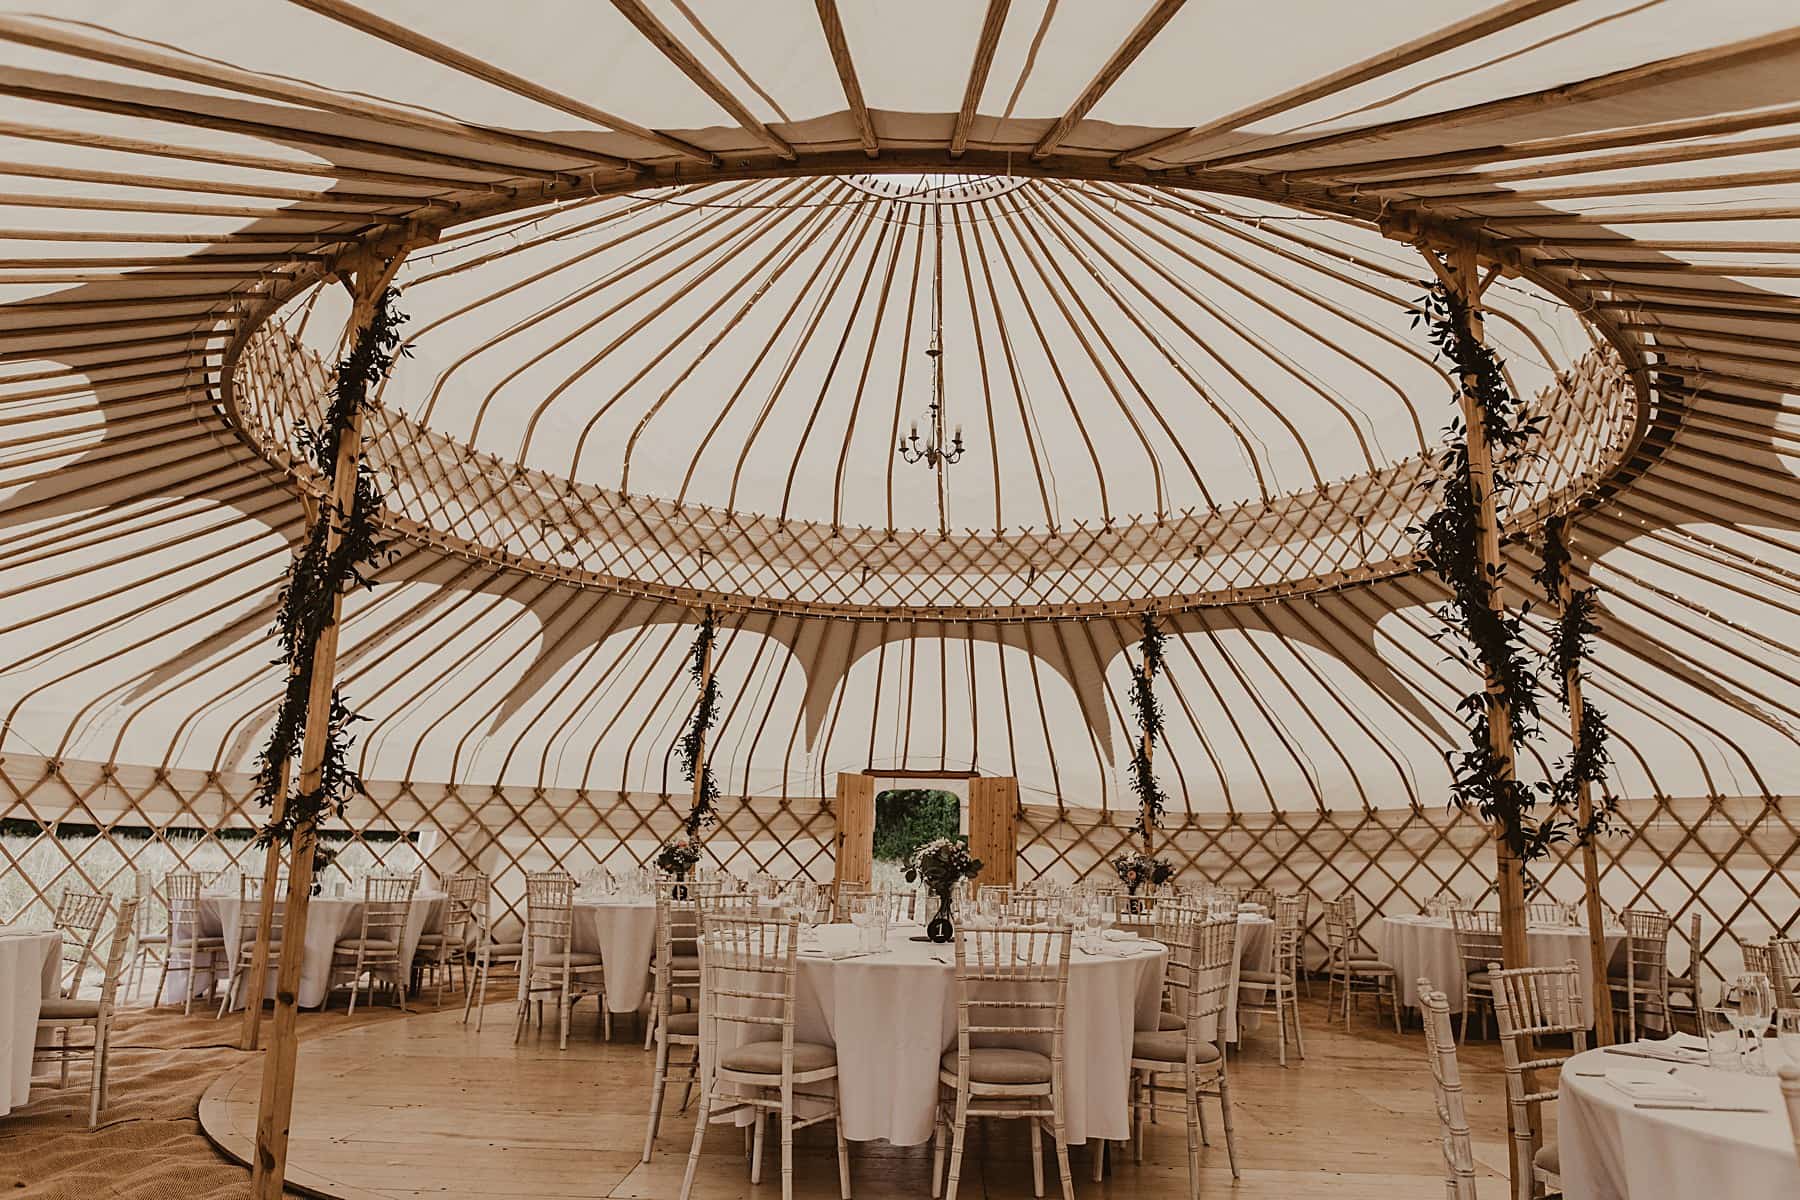 Interior of yurt- Welsh wedding photographer